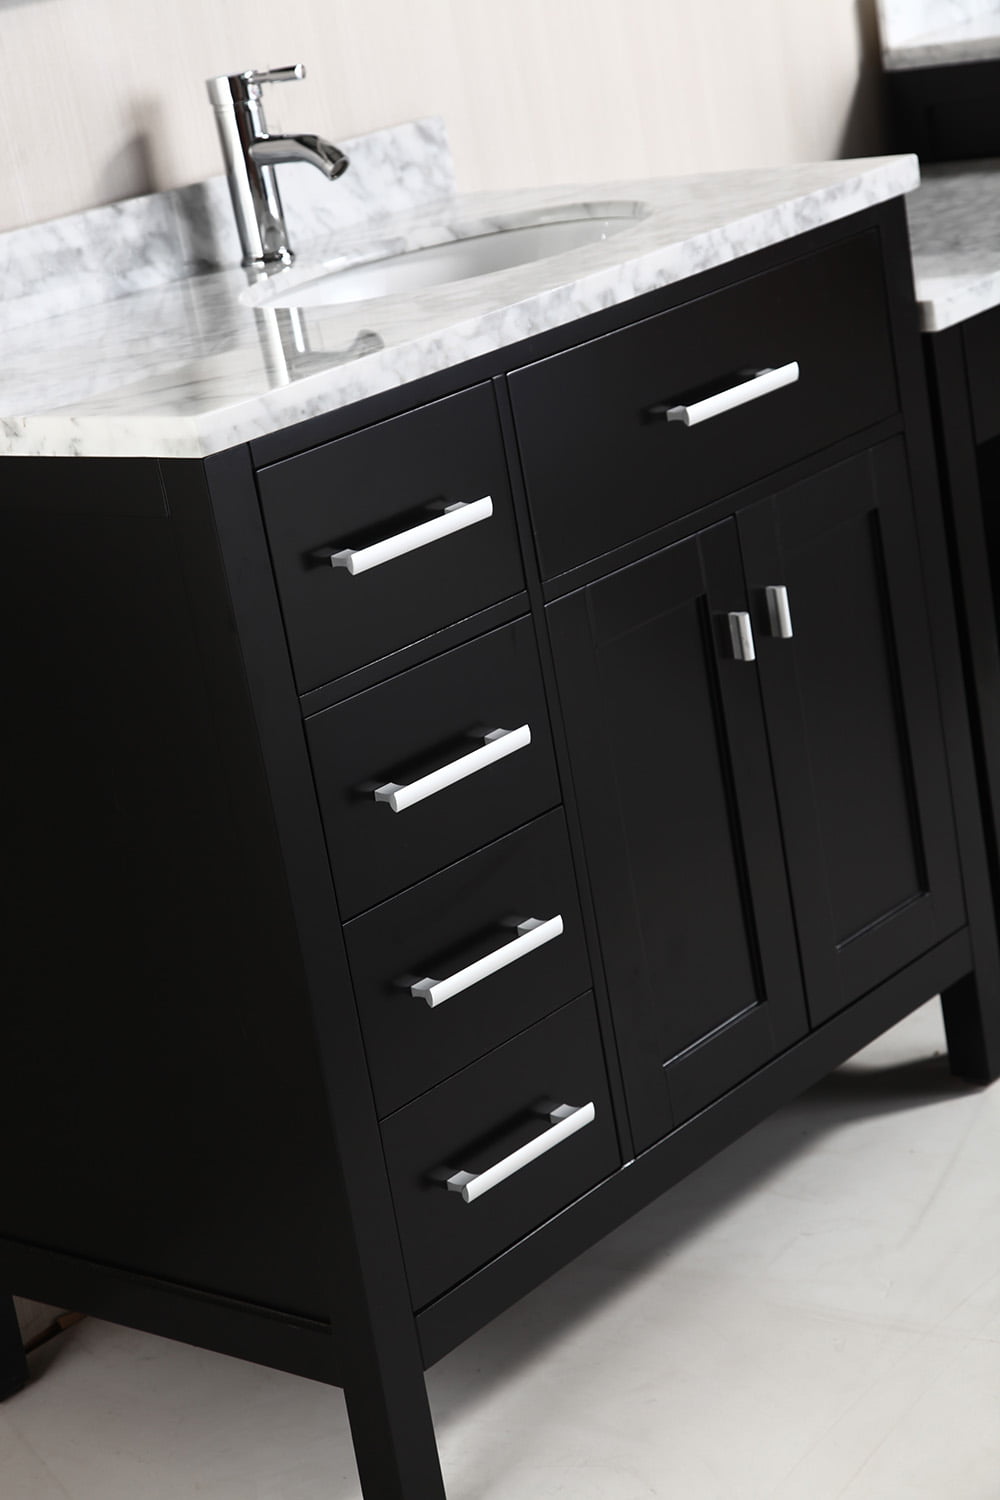 Estate 102 Double Sink Bathroom Vanity Modular Set - Gray – Design Element  Bath Kitchen